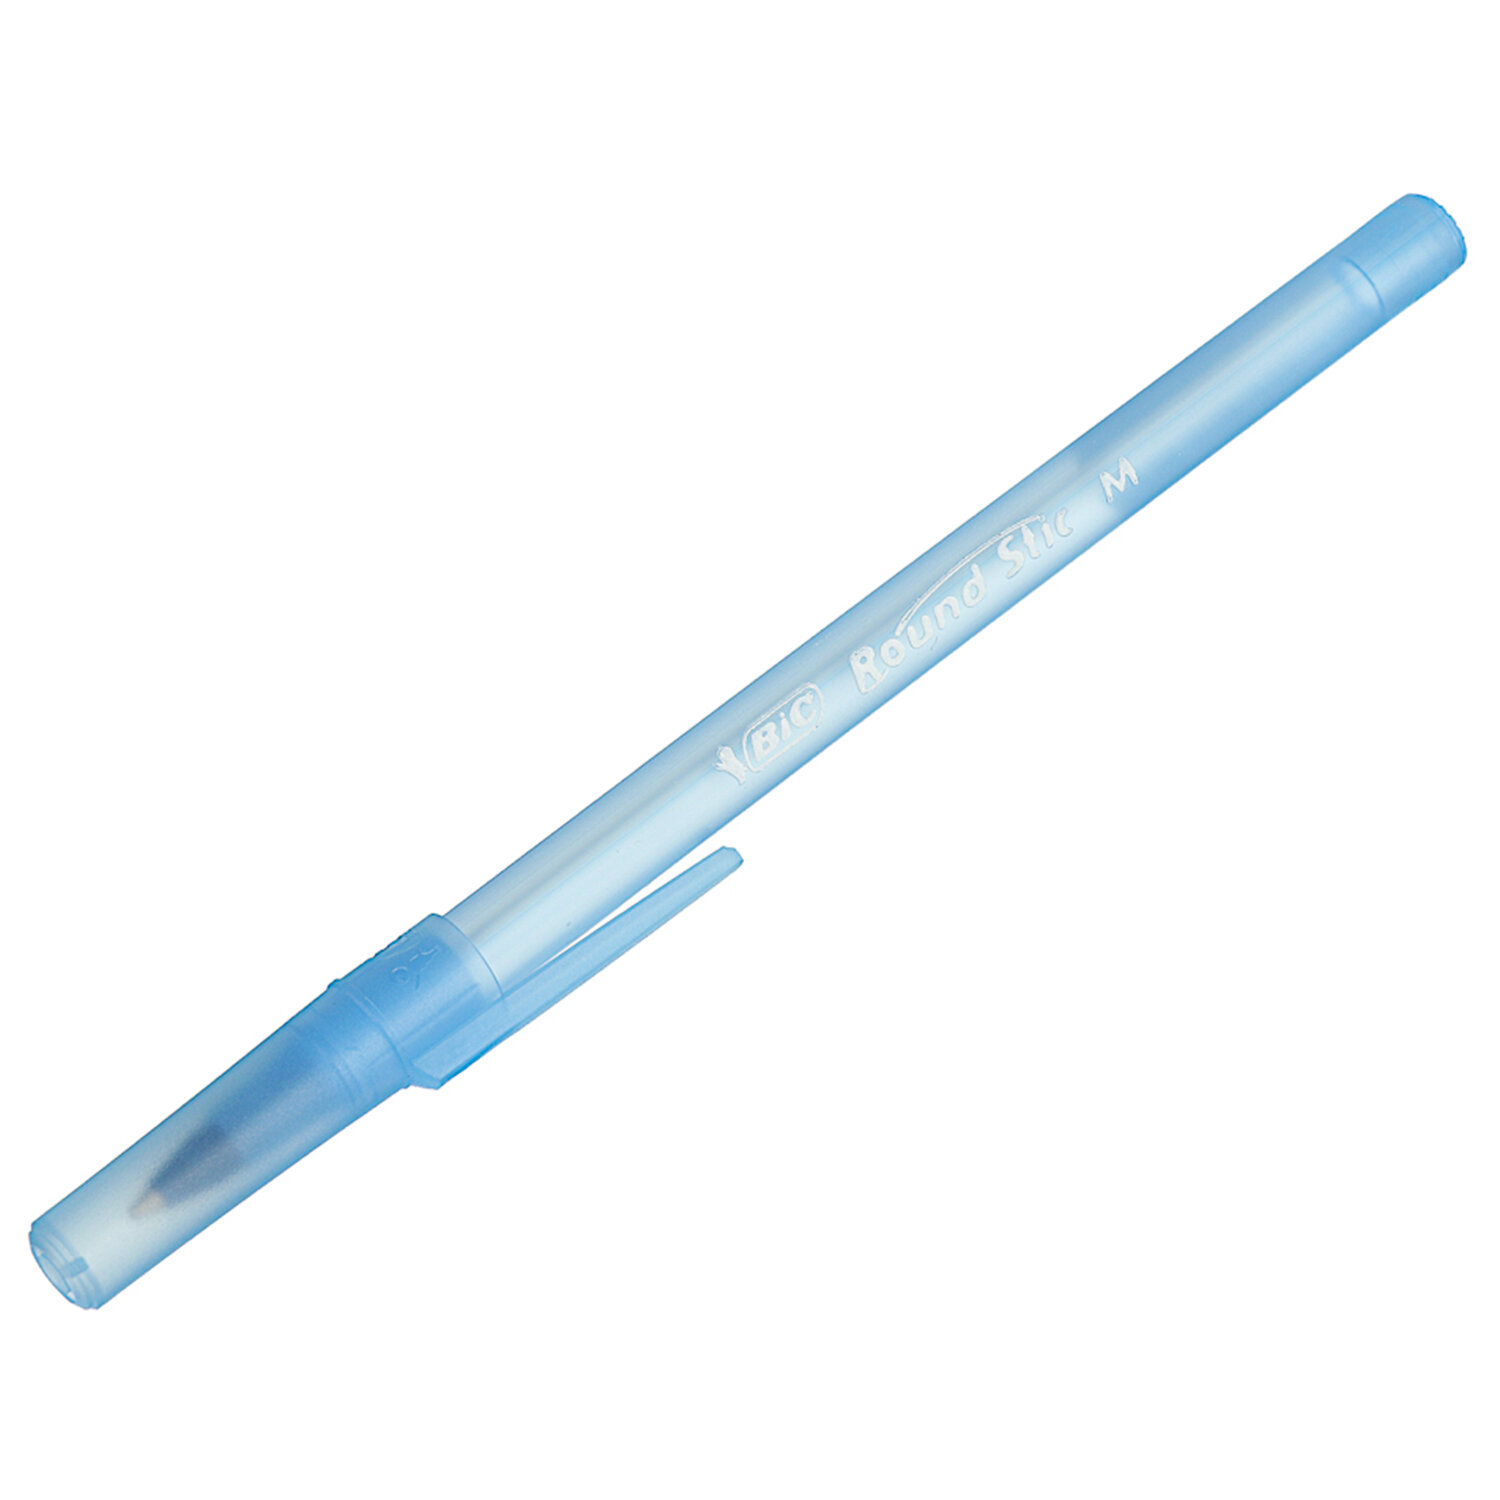 Ручка шариковая bic round stic. Ручка БИК раунд стик. Ручка шариковая BIC "Round Stic", синяя, корпус голубой, узел 1 мм,. Ручка шариковая одноразовая BIC Round Stic exact синяя (толщина линии 0.35 мм).